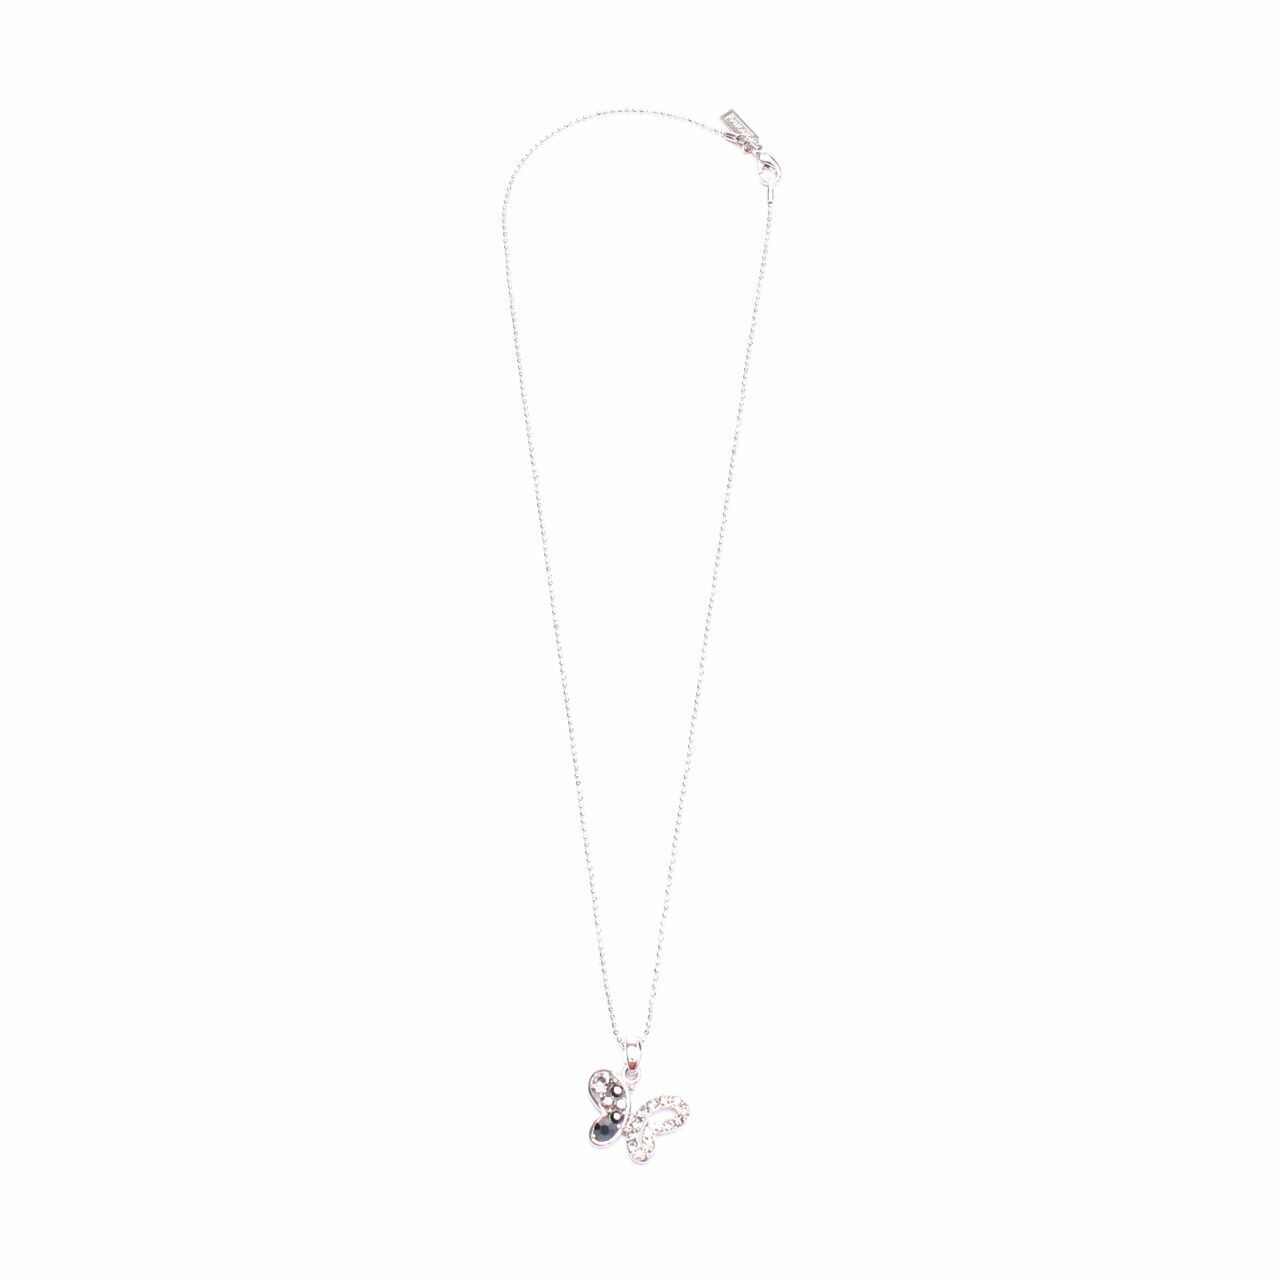 Chomel Silver Butterfly Necklace Jewelry